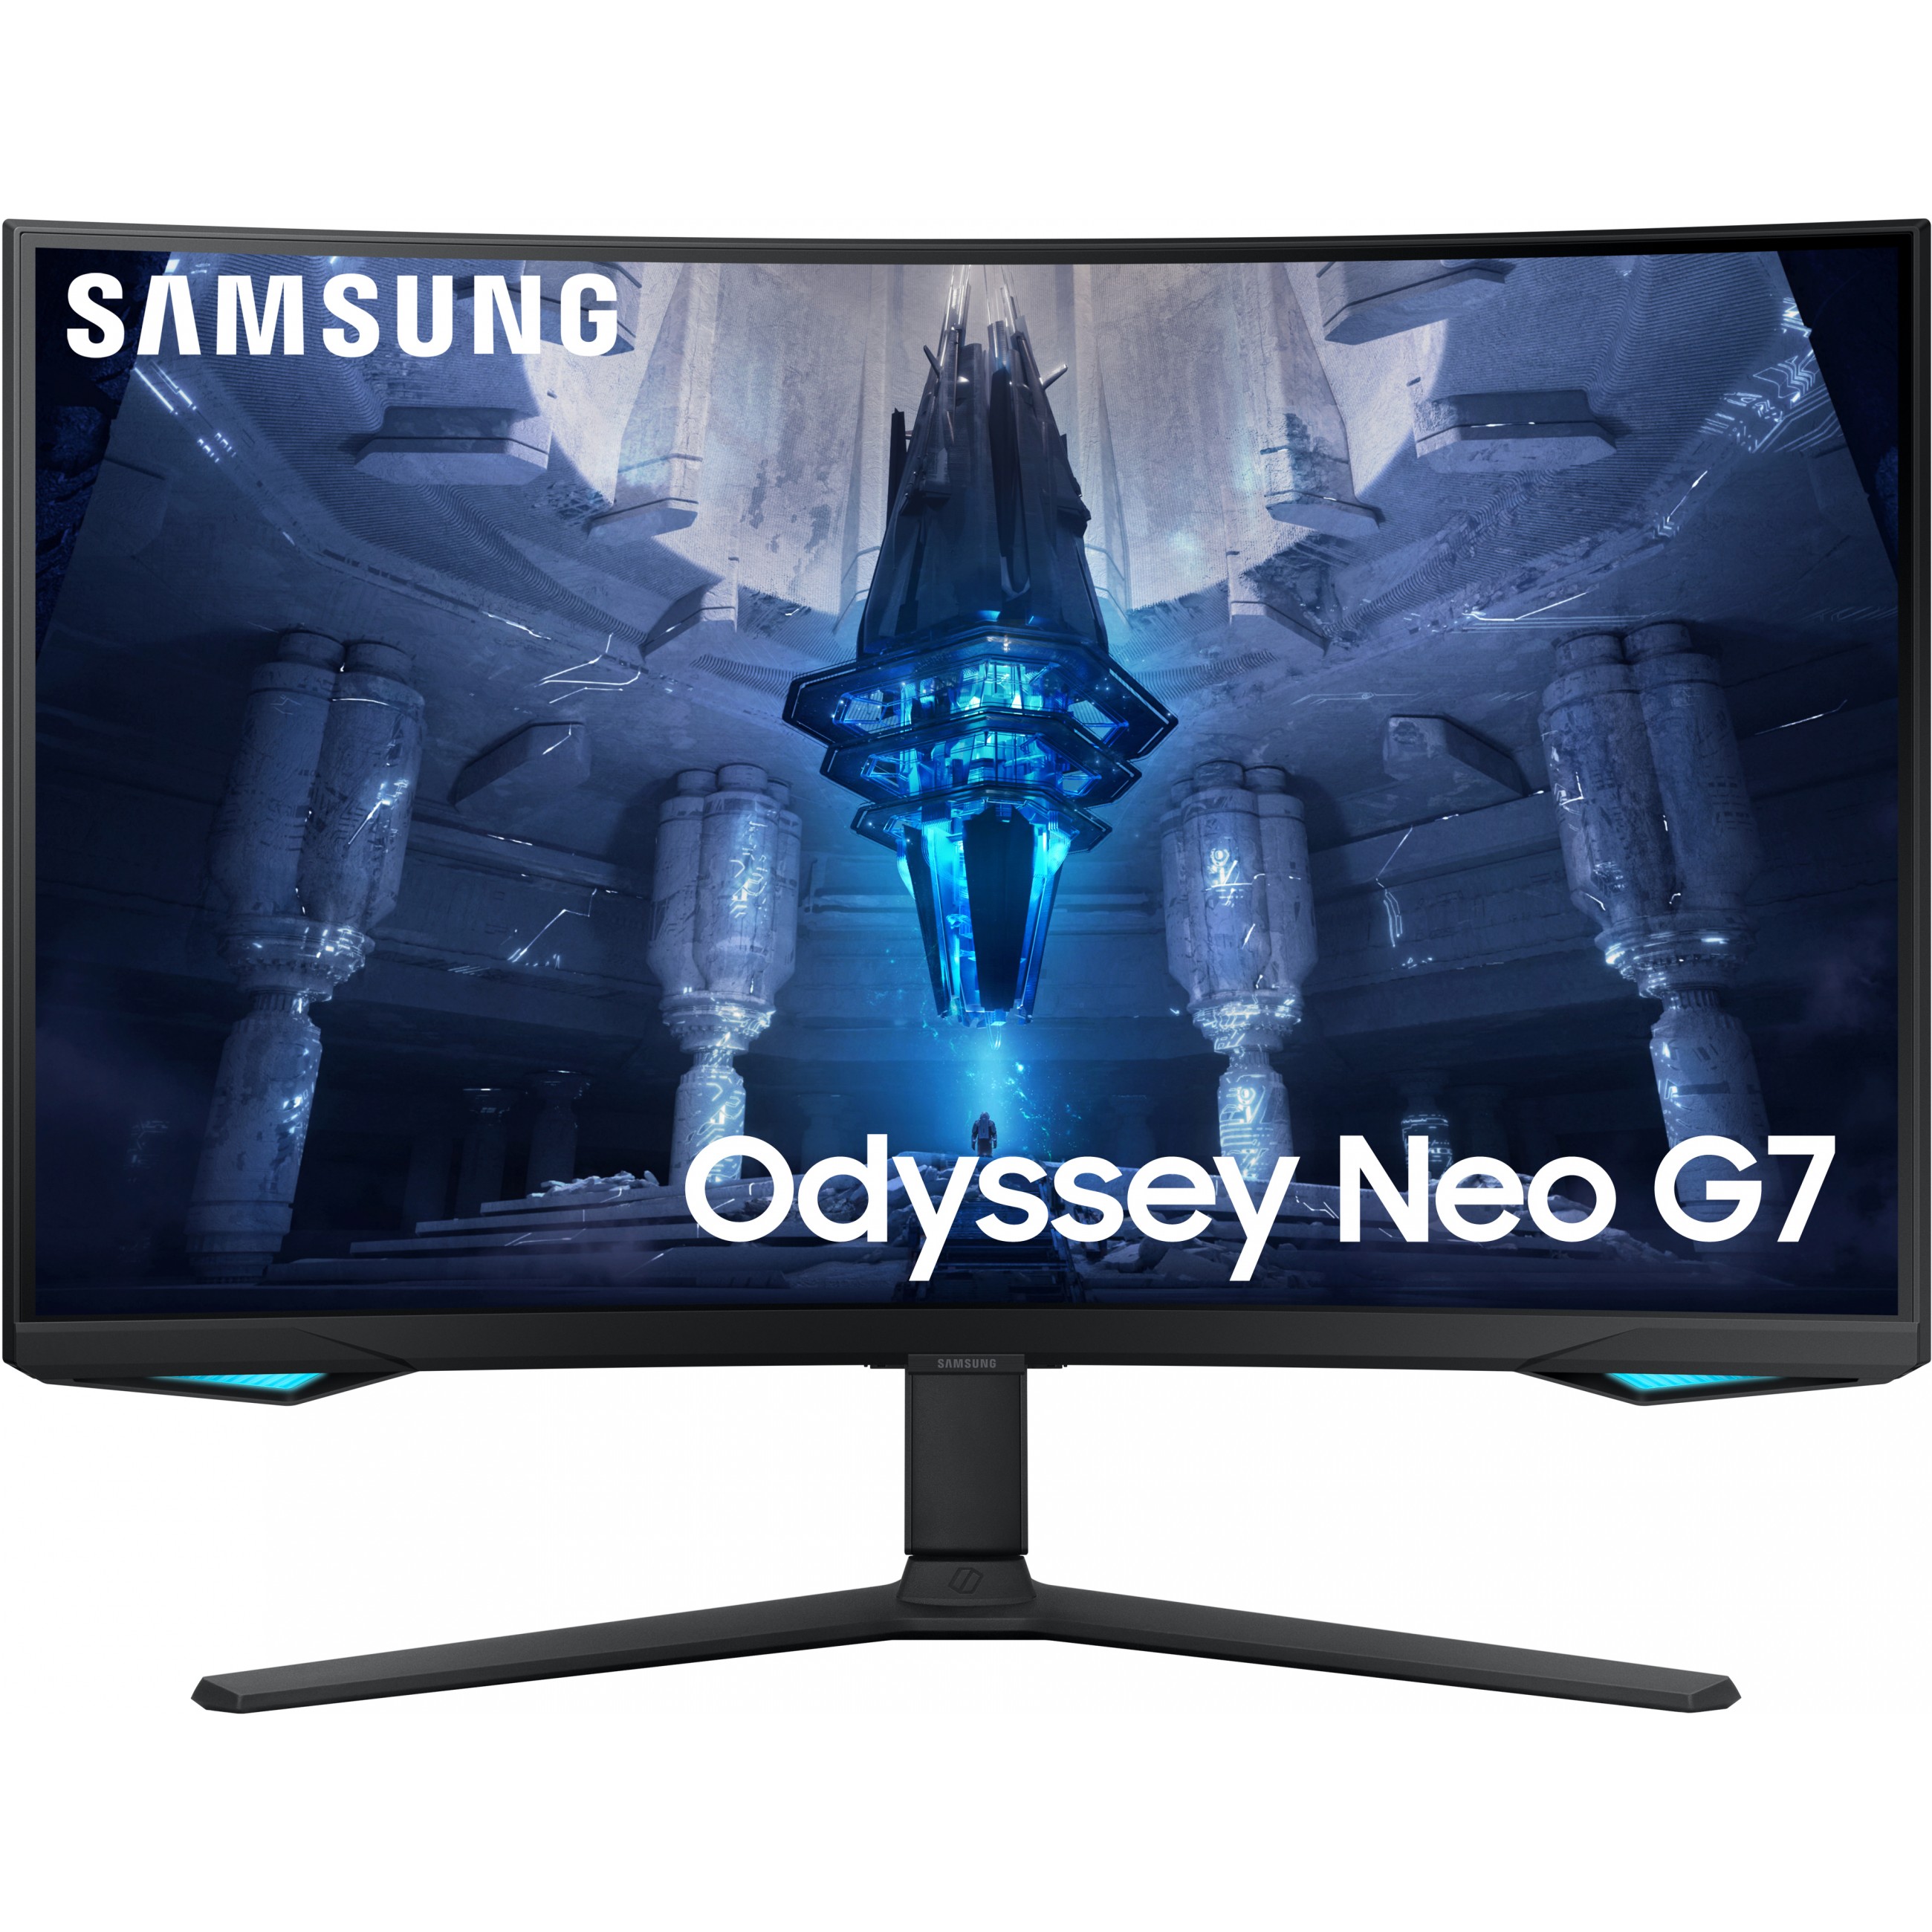 Samsung Odyssey Neo G7 G75NB computer monitor